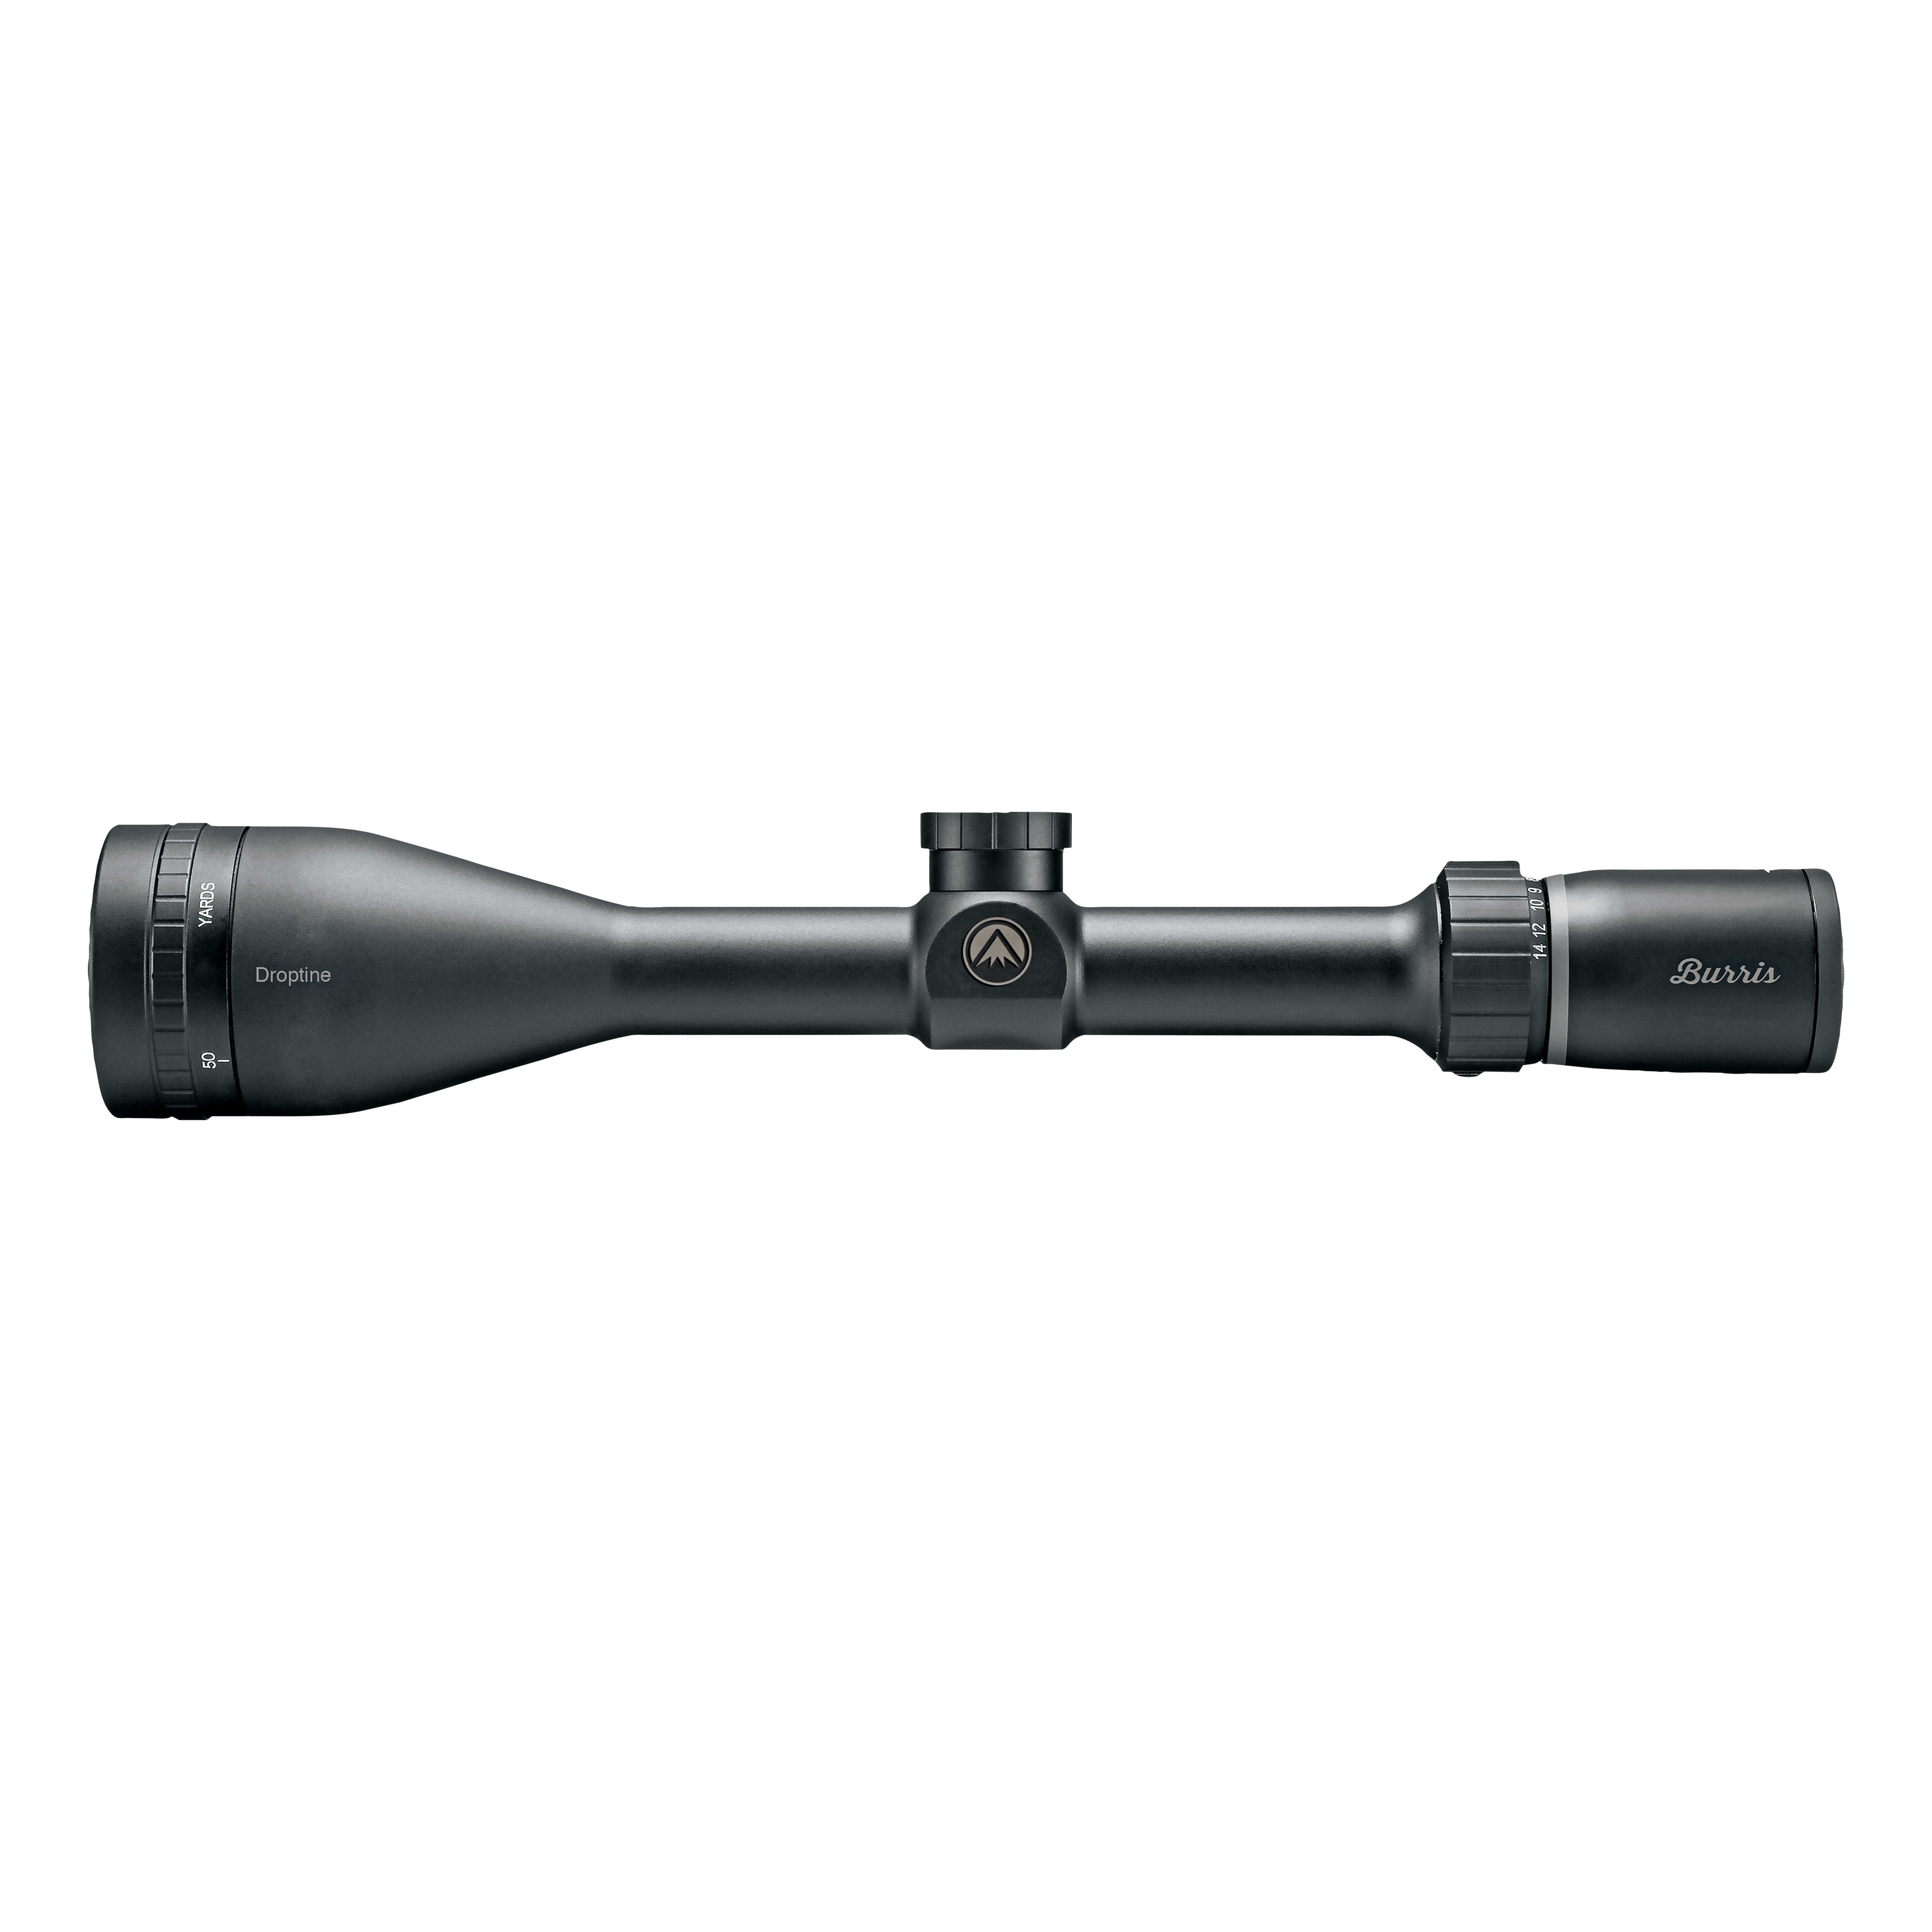 Burris Droptine 1" Riflescopes - 4.5-14x42mm Side View